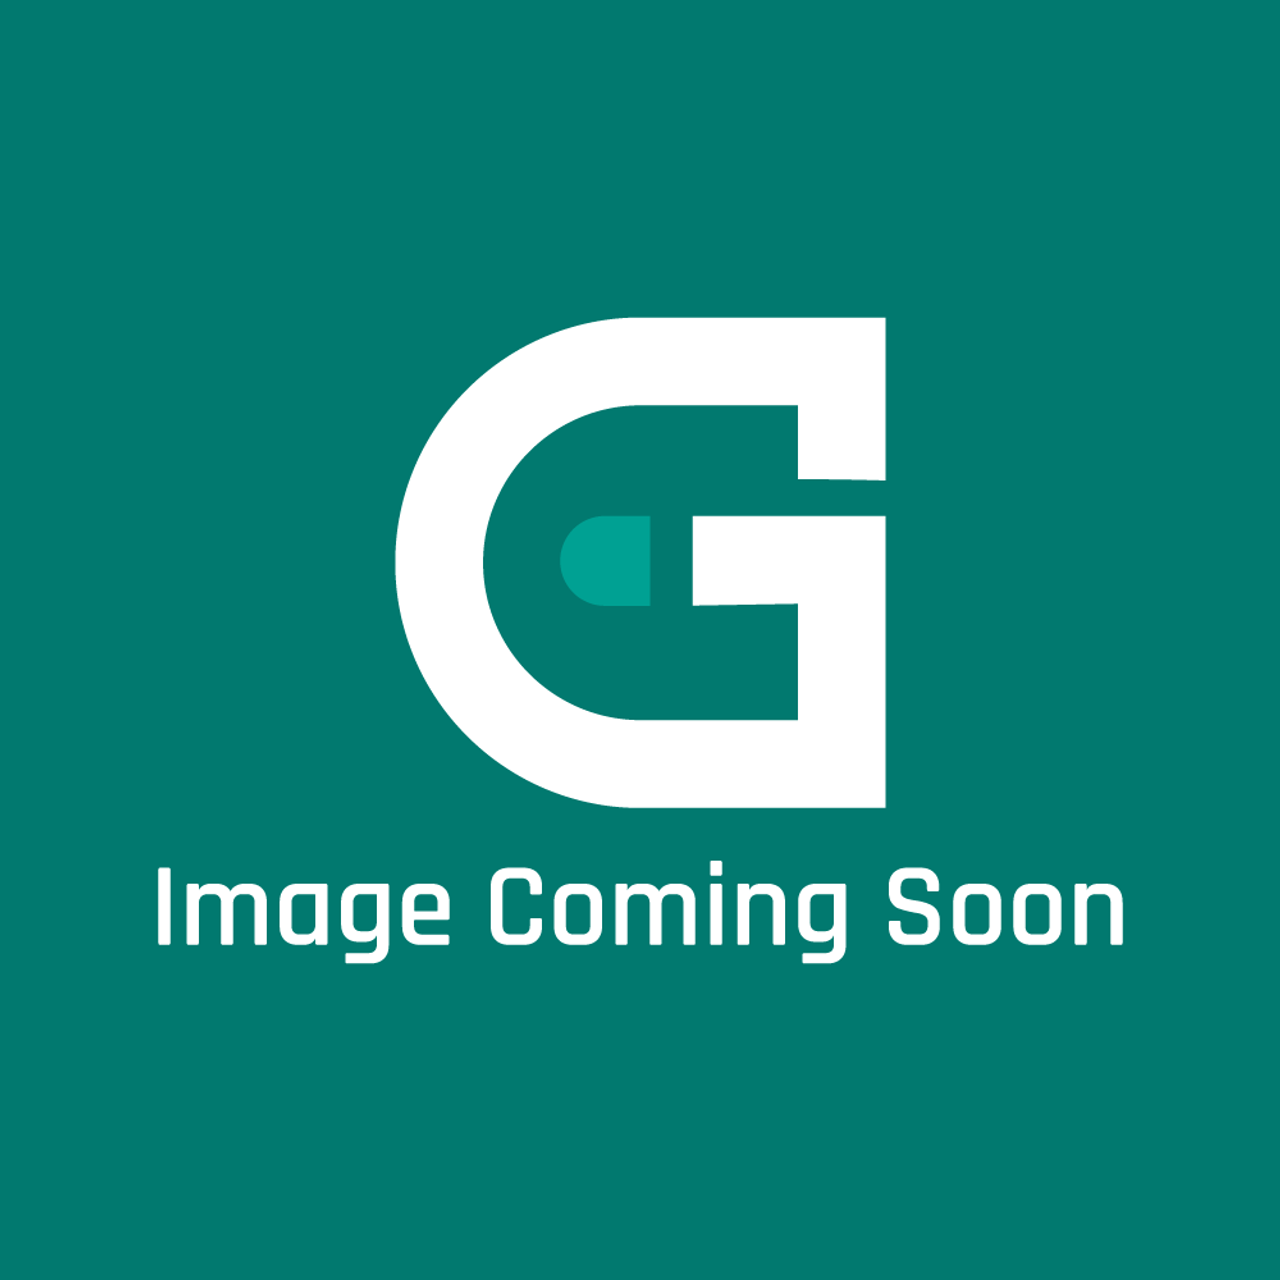 Hoshizaki 4A056001 - Emblem - Image Coming Soon!